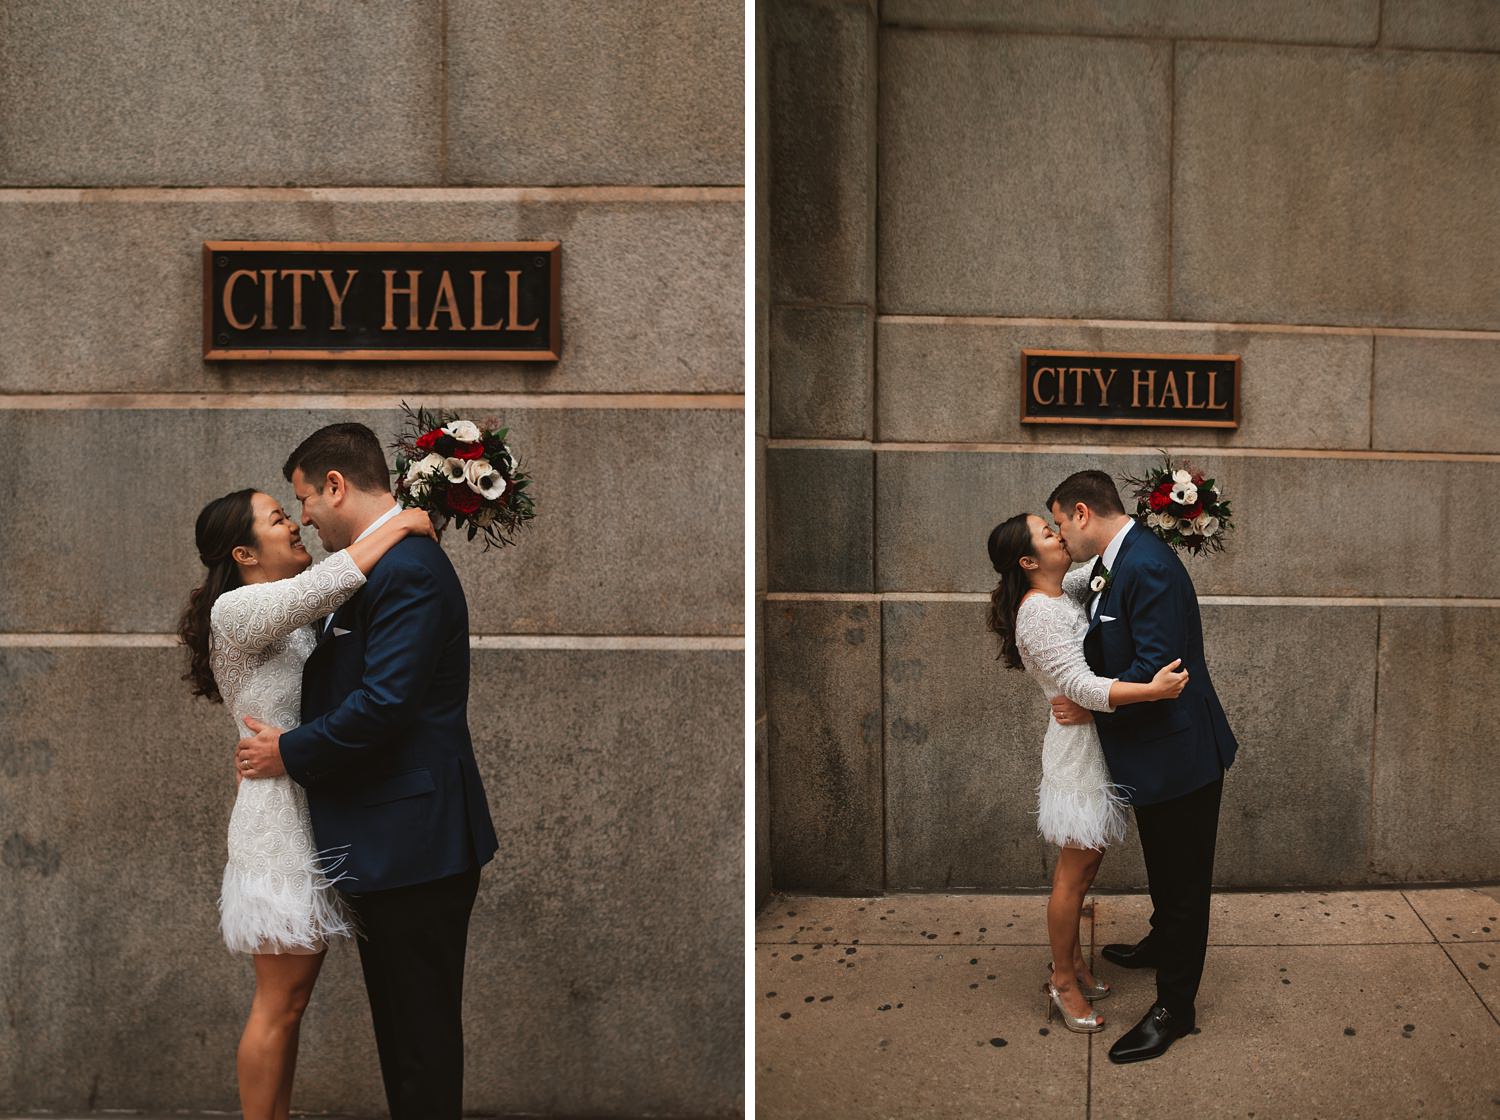 Chicago Courthouse Elopement wedding - The Adamkovi, city hall sign